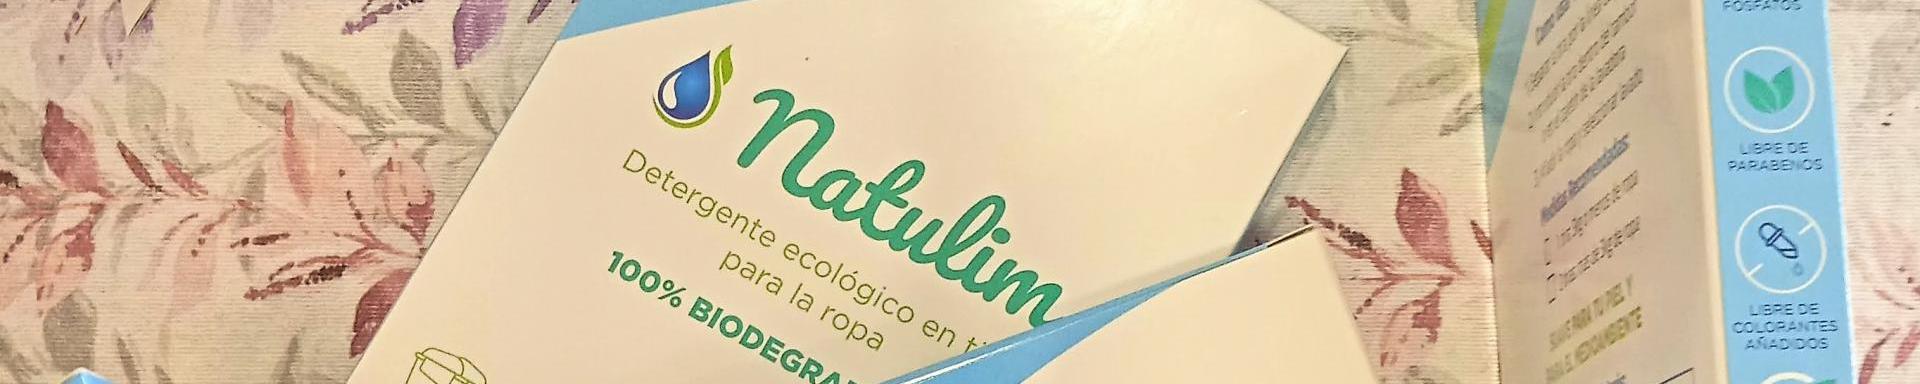 Detergente ecológico Natulim